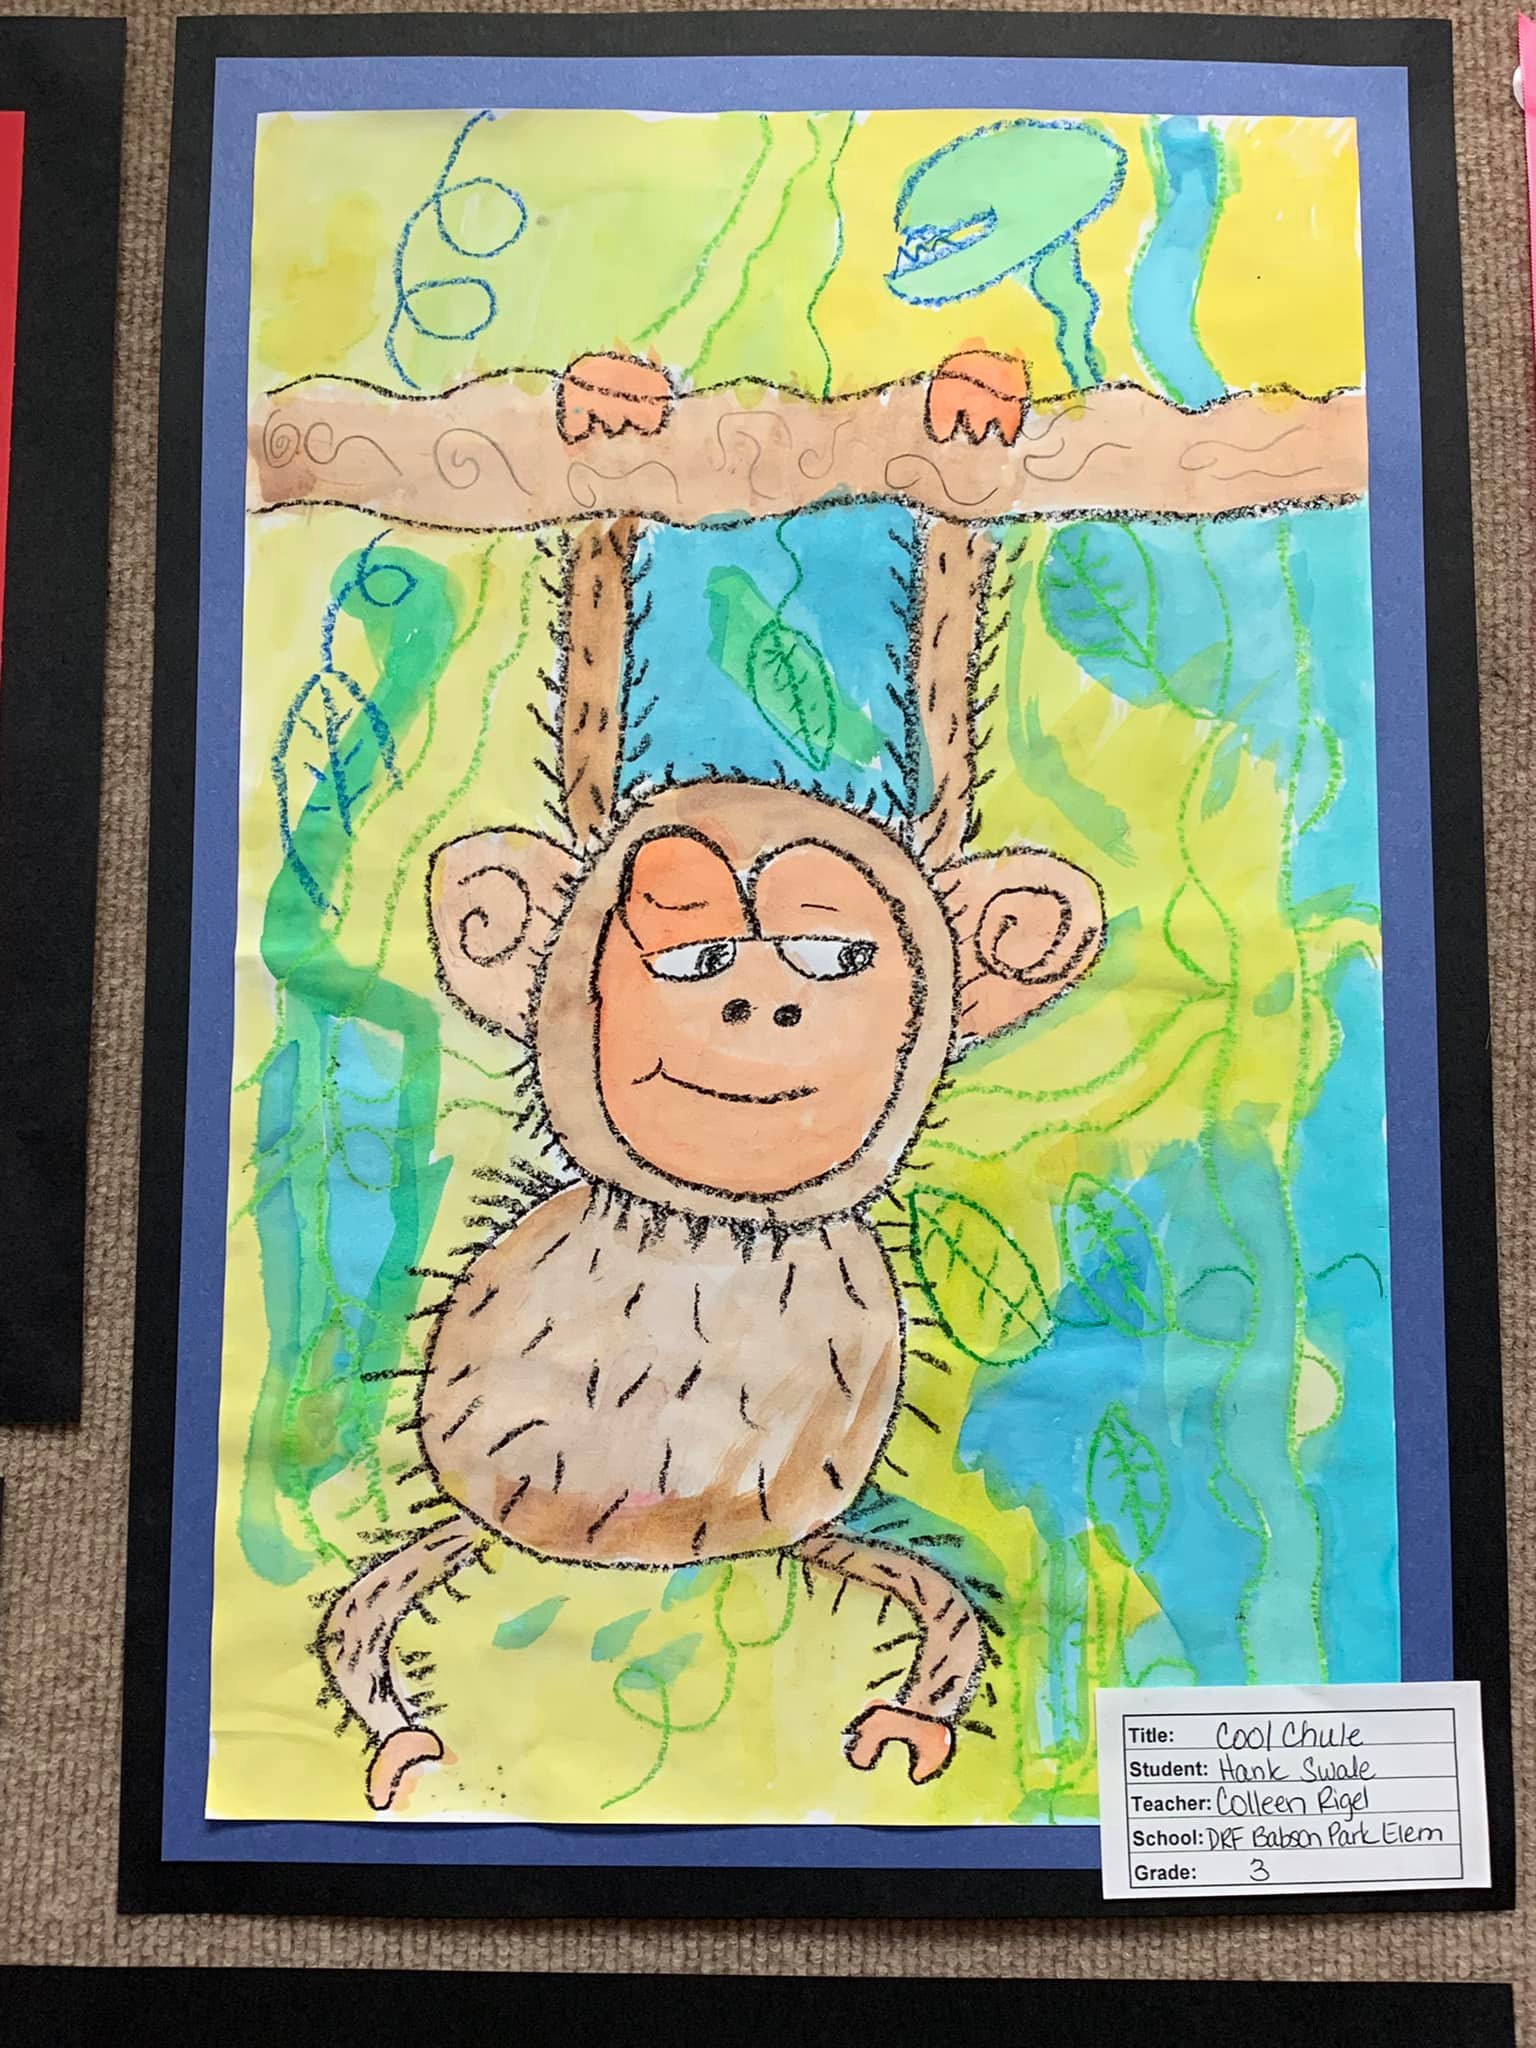 Student art show artwork.